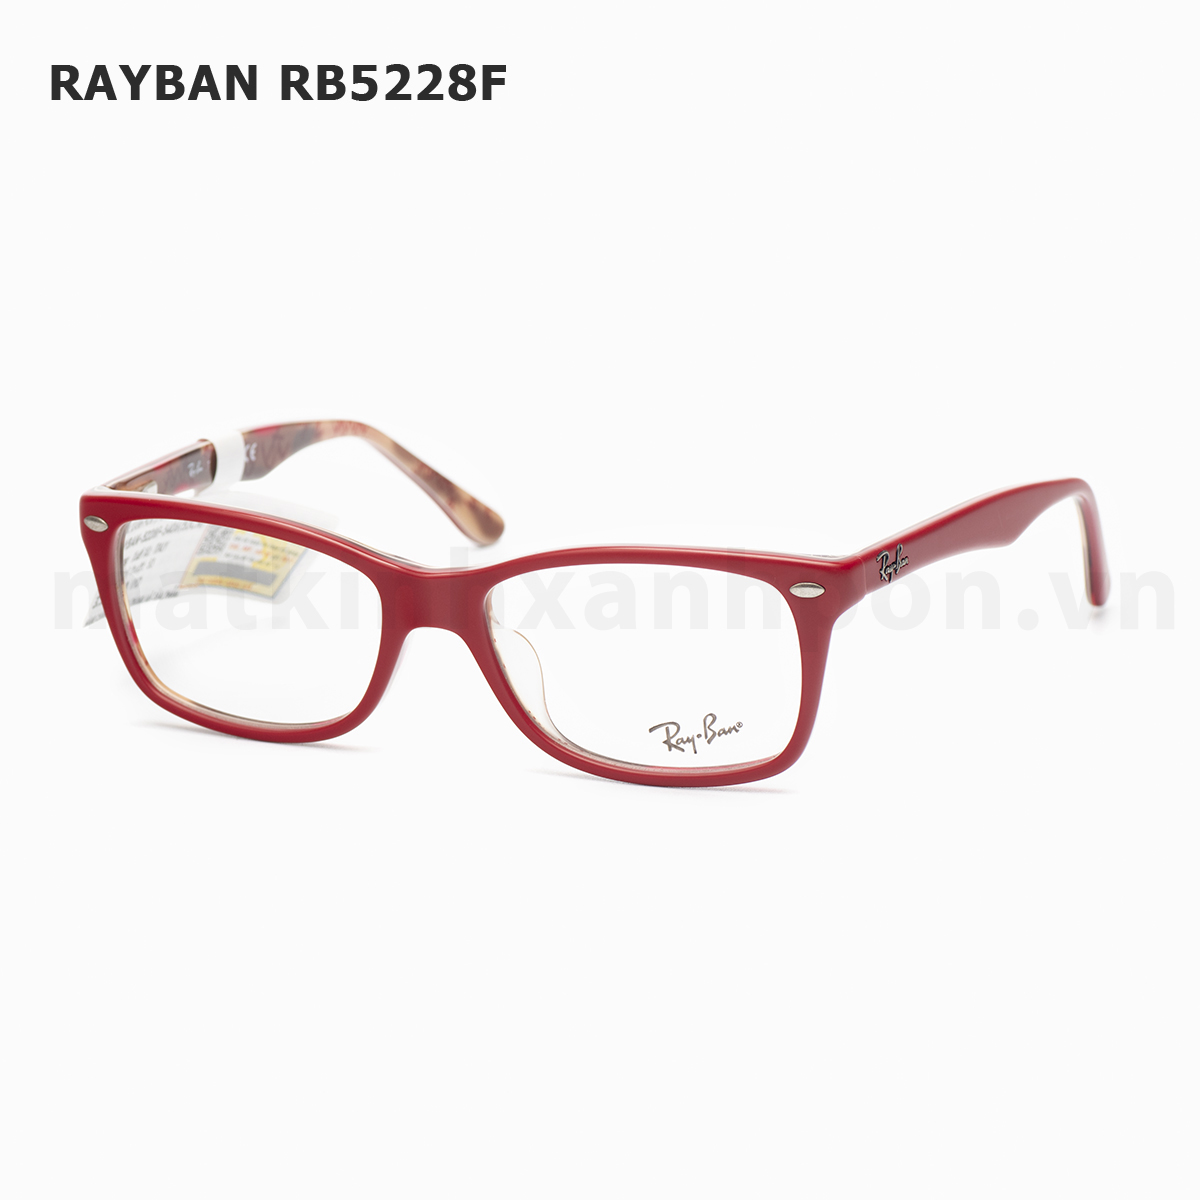 Rayban RB5228F